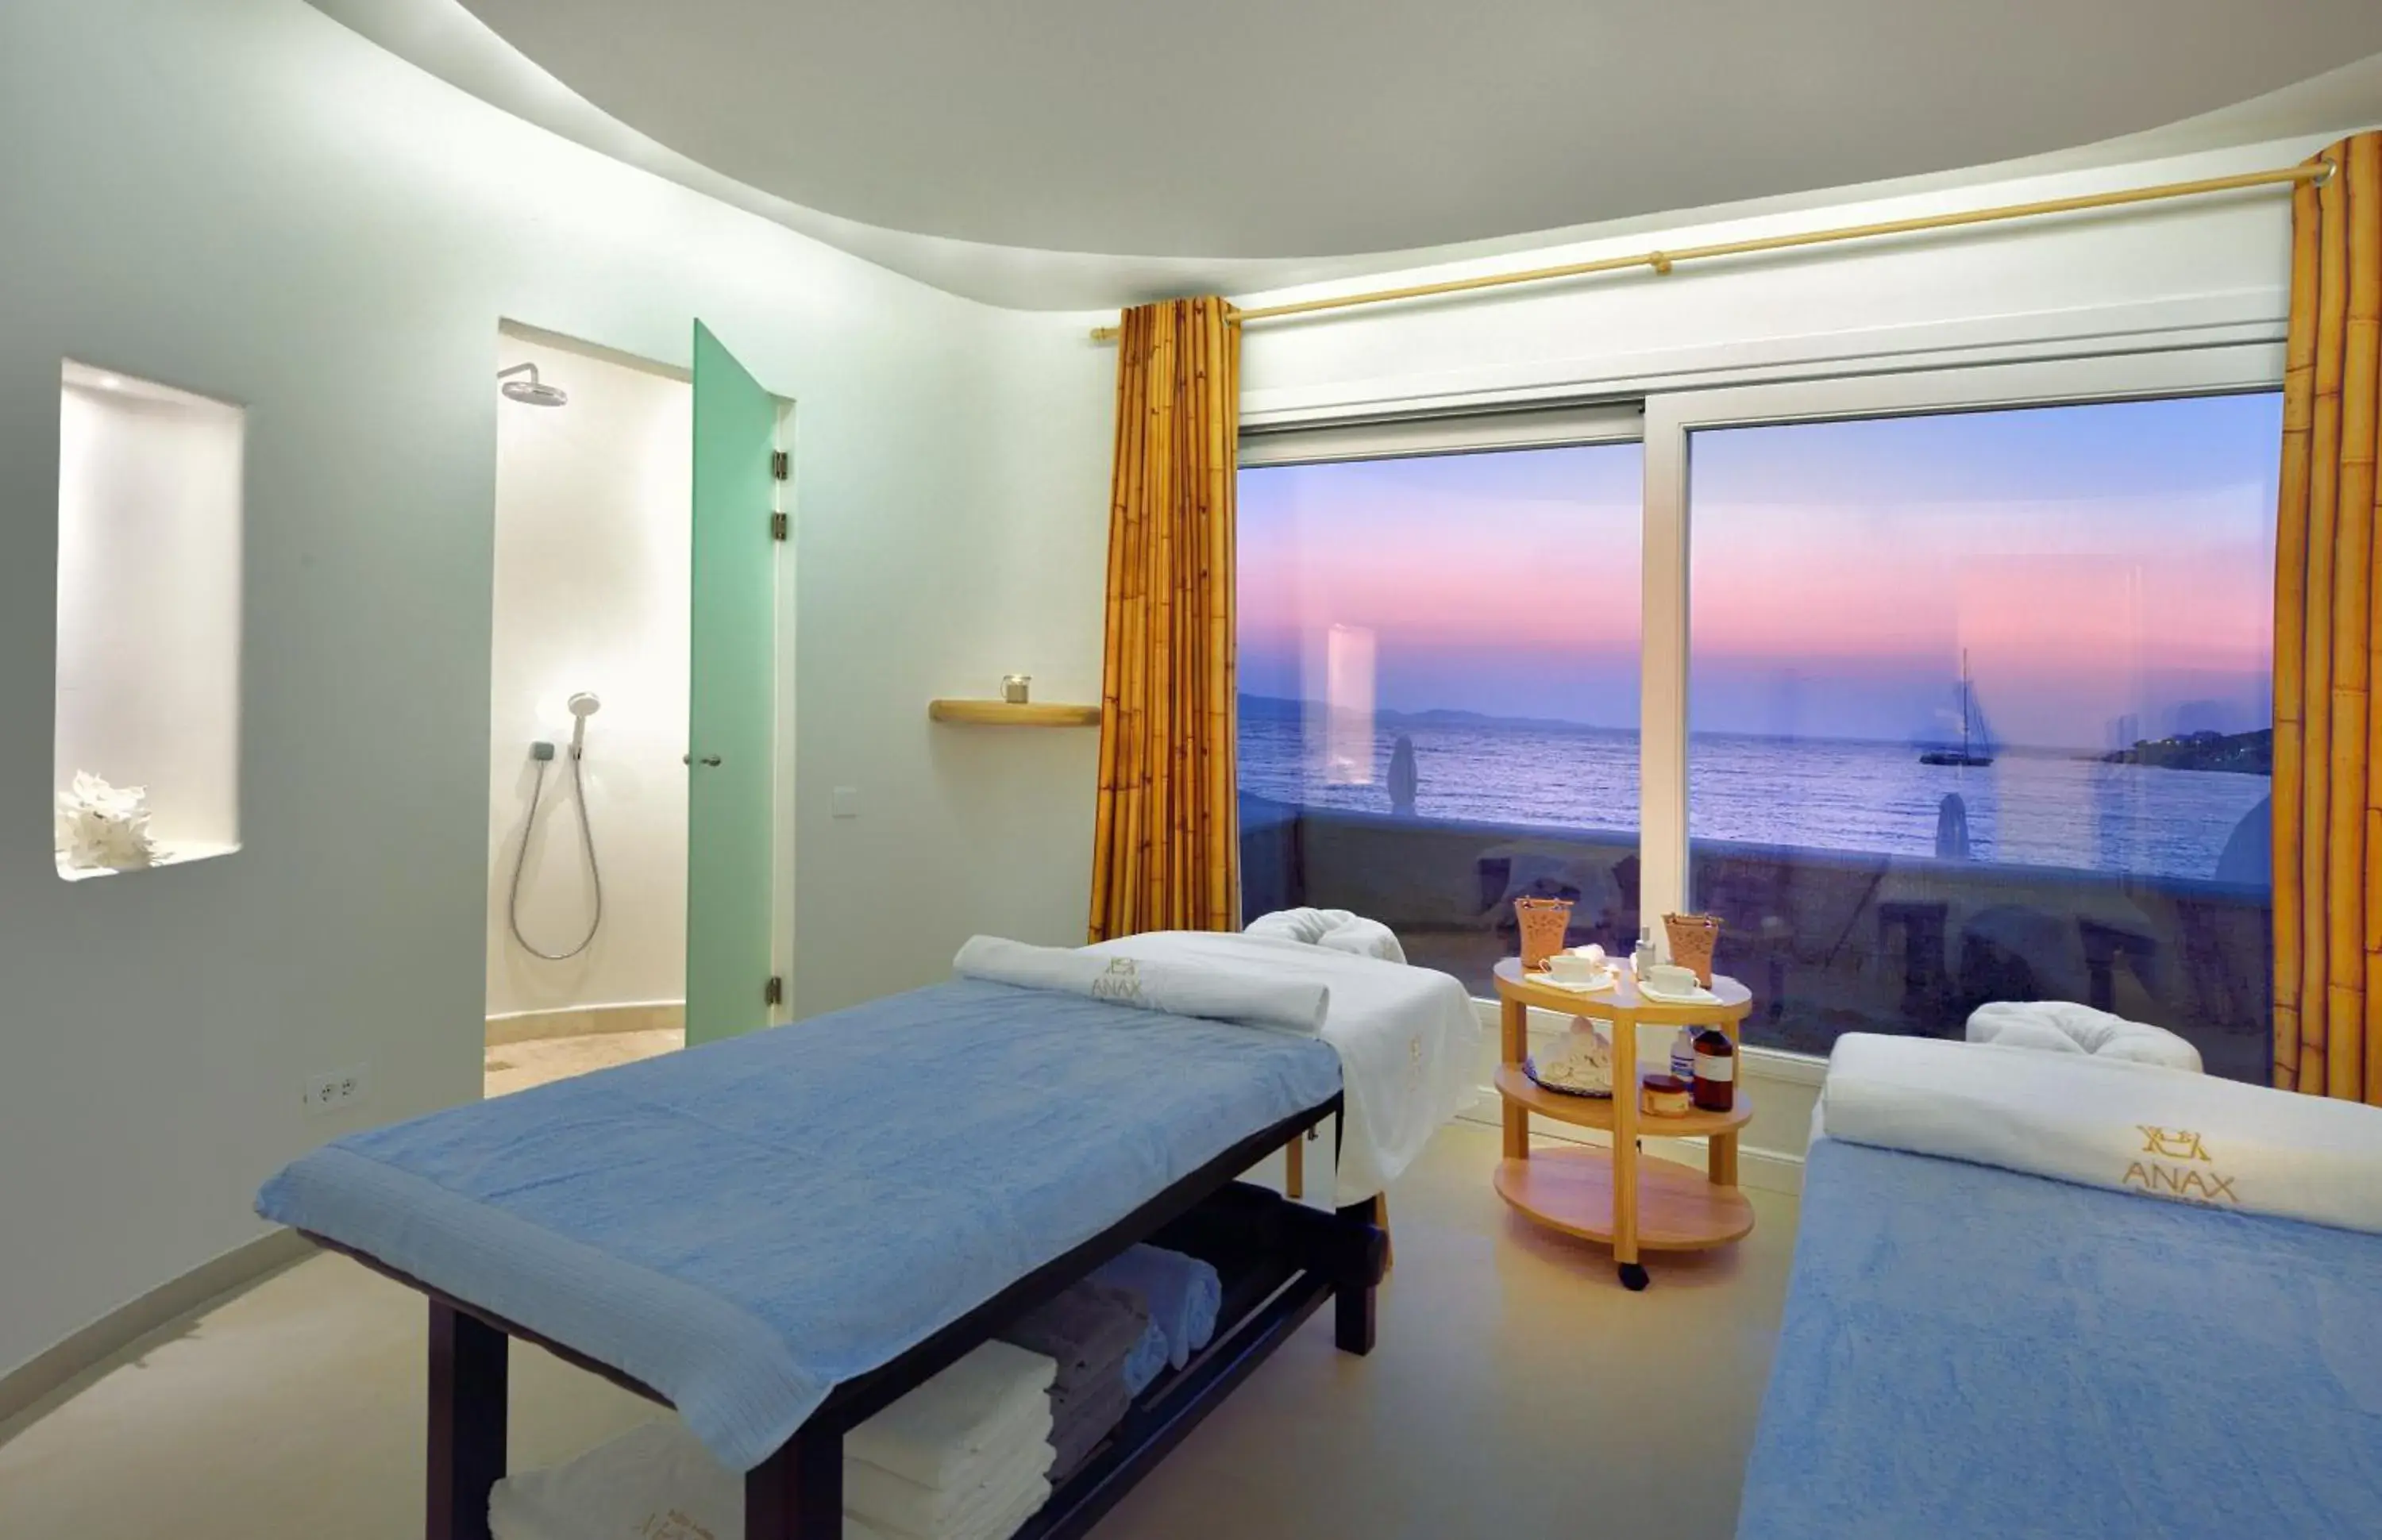 Massage, Sunrise/Sunset in Anax Resort and Spa